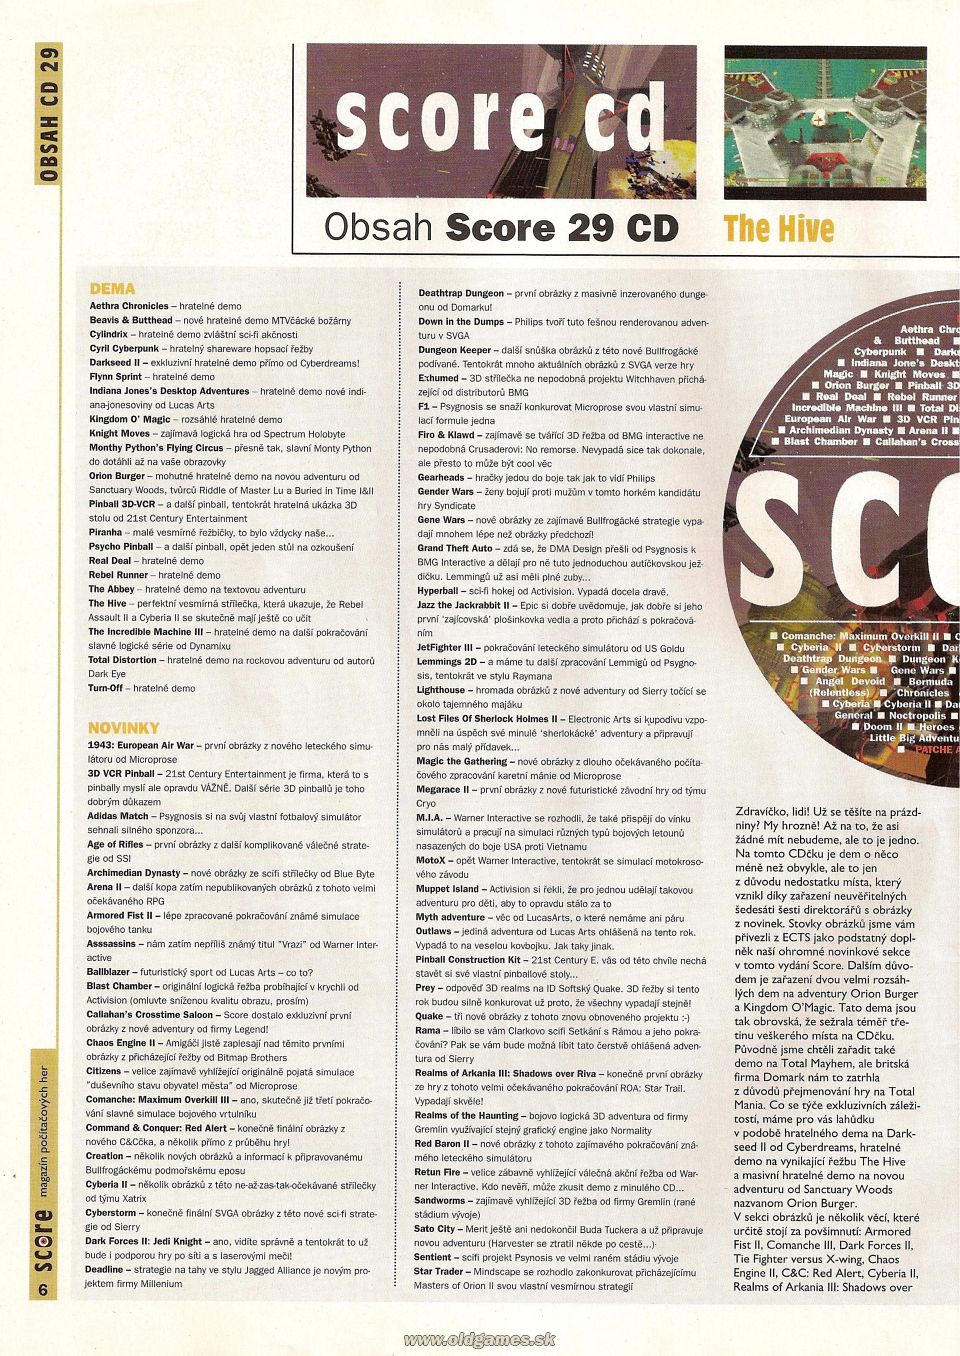 Obsah Score CD 29